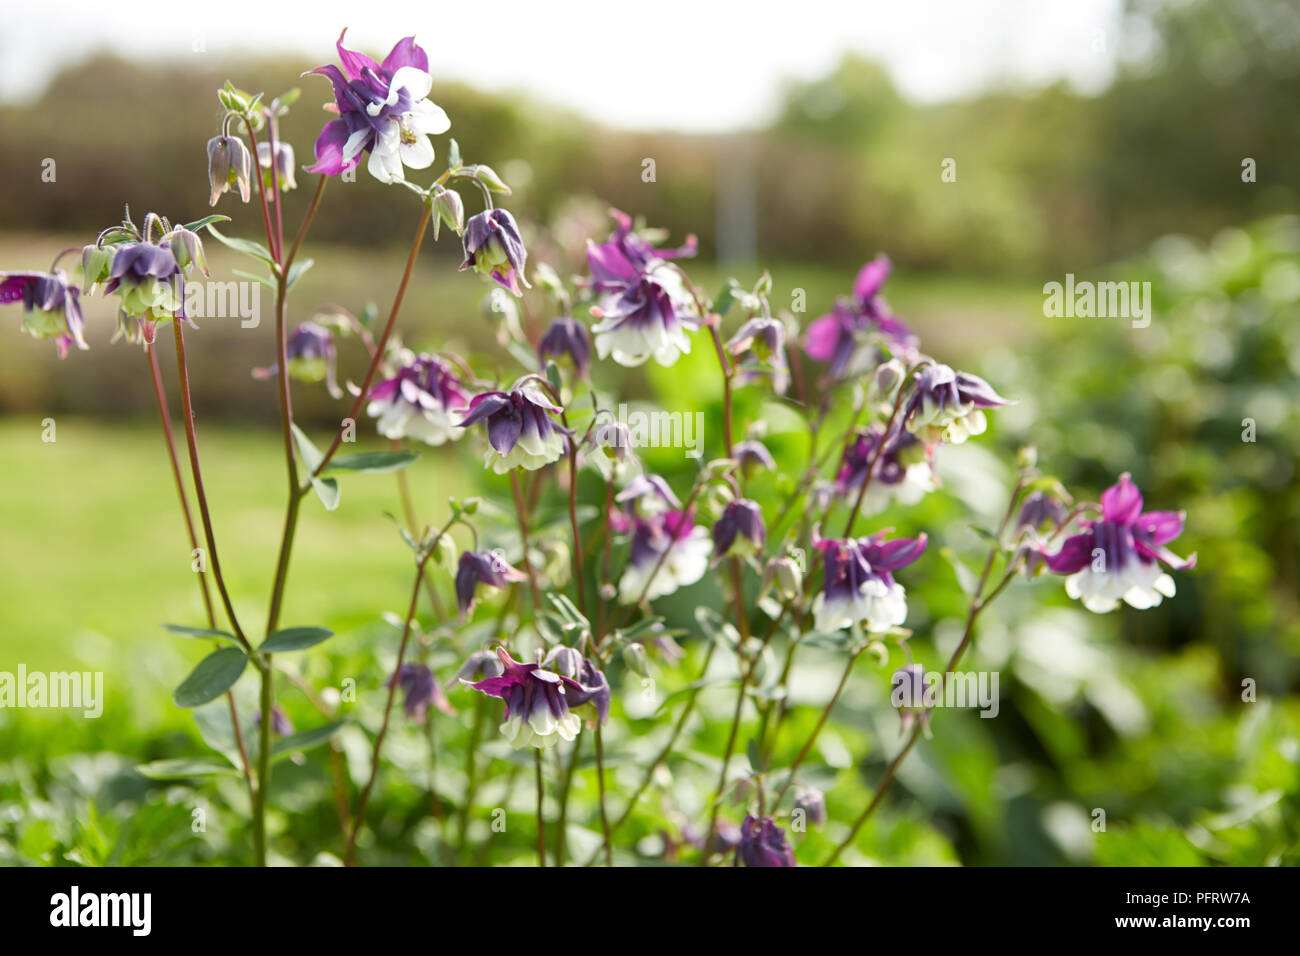 Aquilegias (Columbine) in a garden Stock Photo